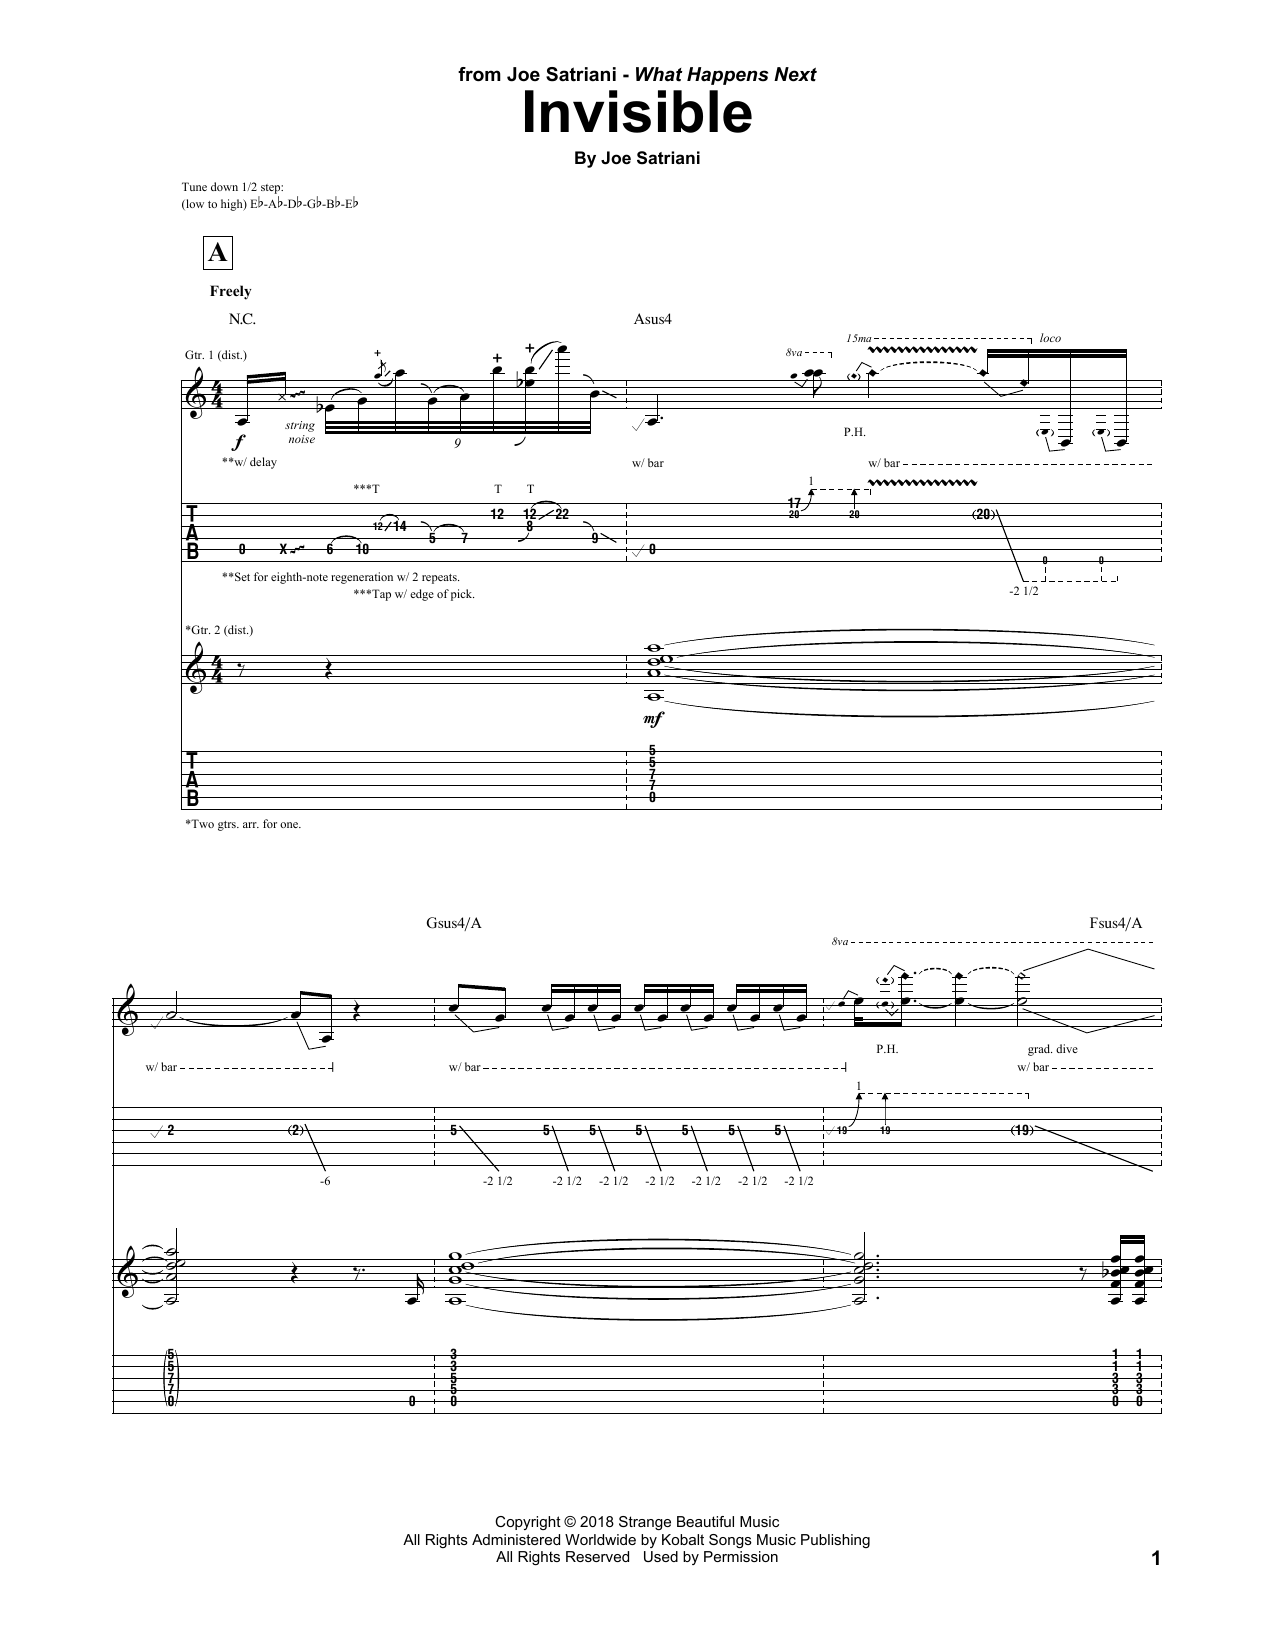 Joe Satriani Invisible Sheet Music Notes & Chords for Guitar Tab - Download or Print PDF